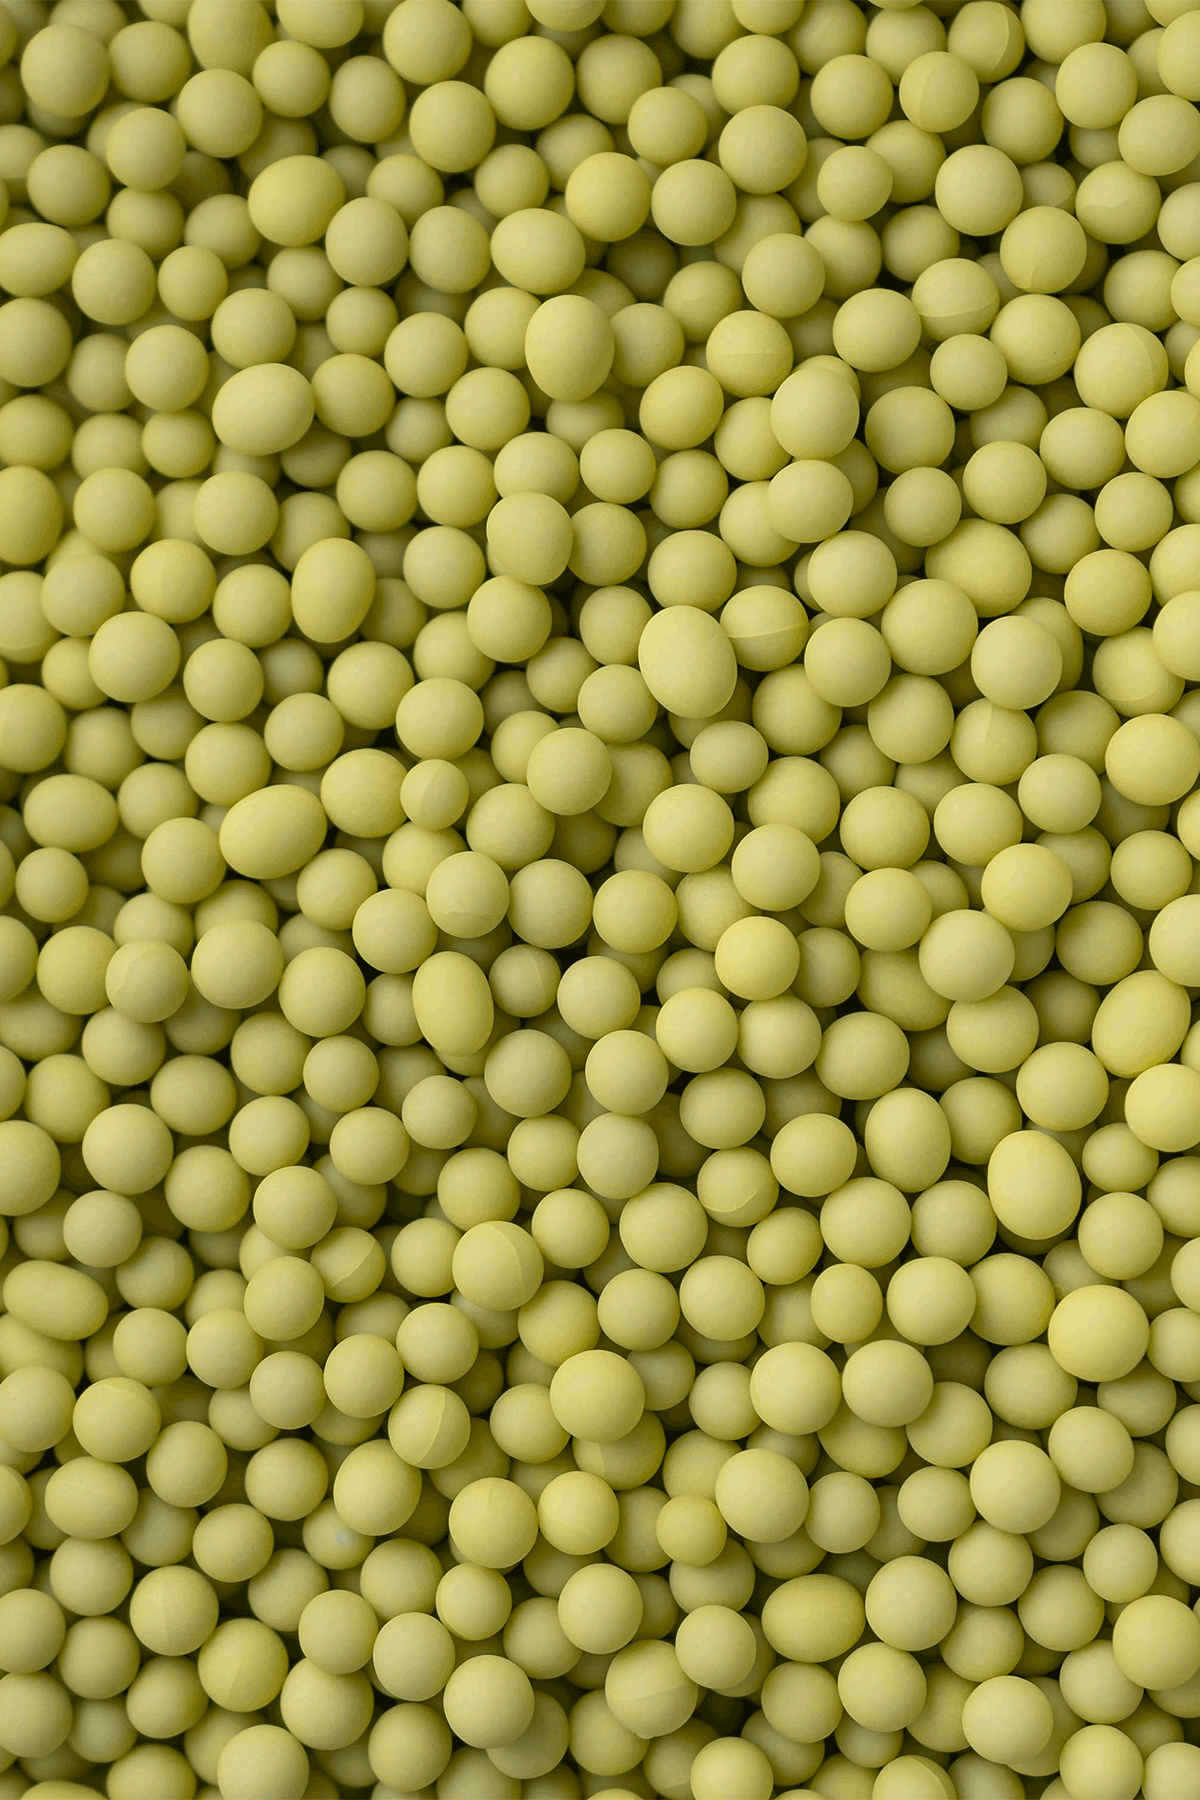 Matt Chocolate Balls - Pastel Yellow - (Small/6mm) Sprinkles Sprinkly